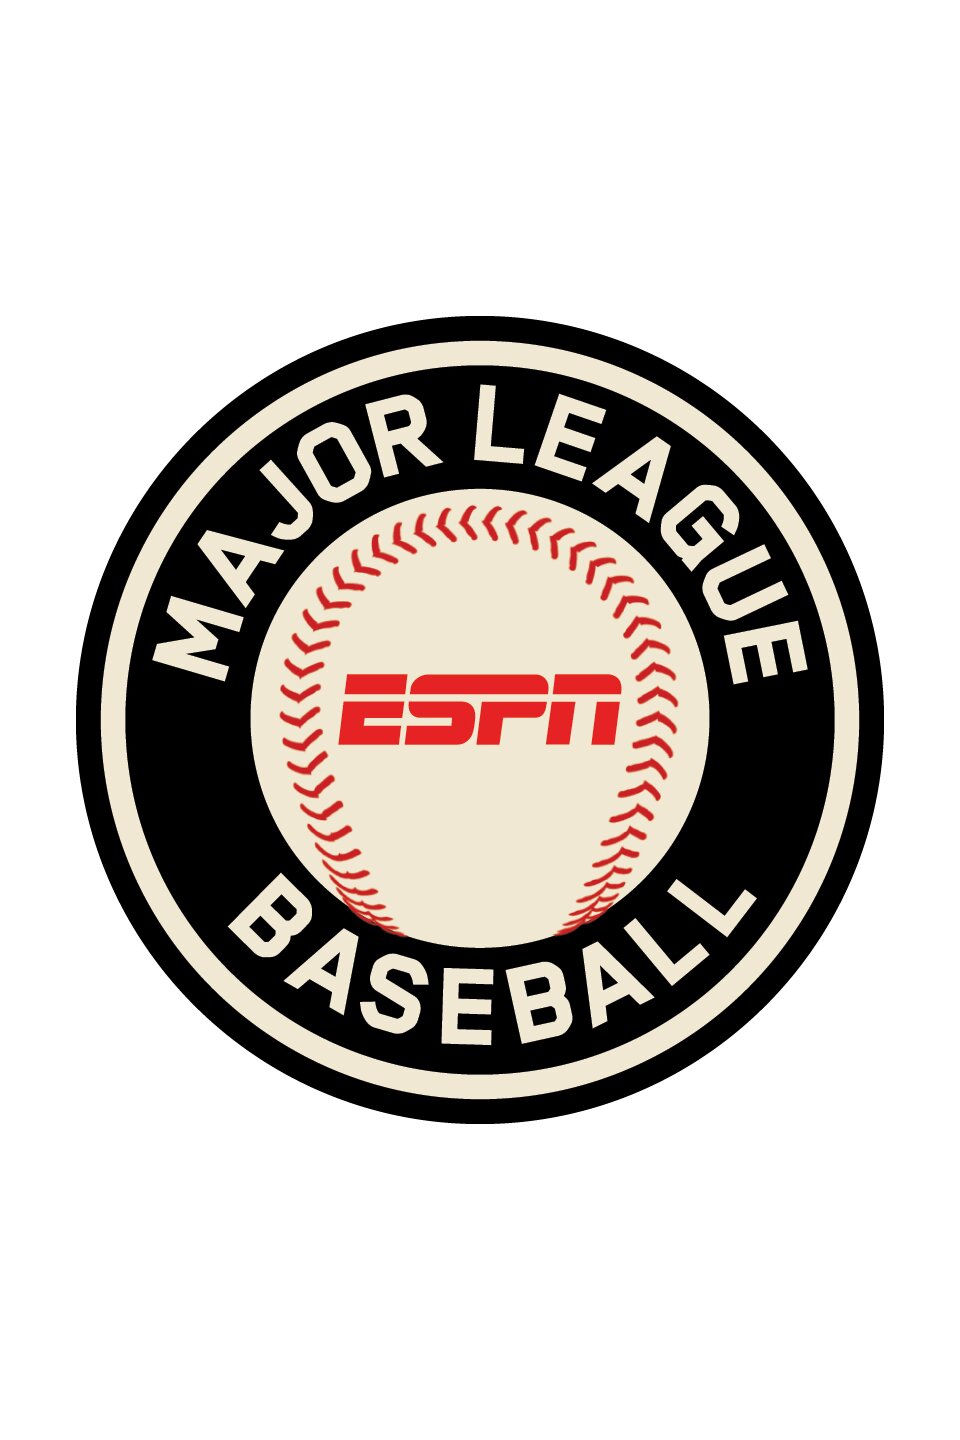 Major League Baseball on ESPN ne zaman